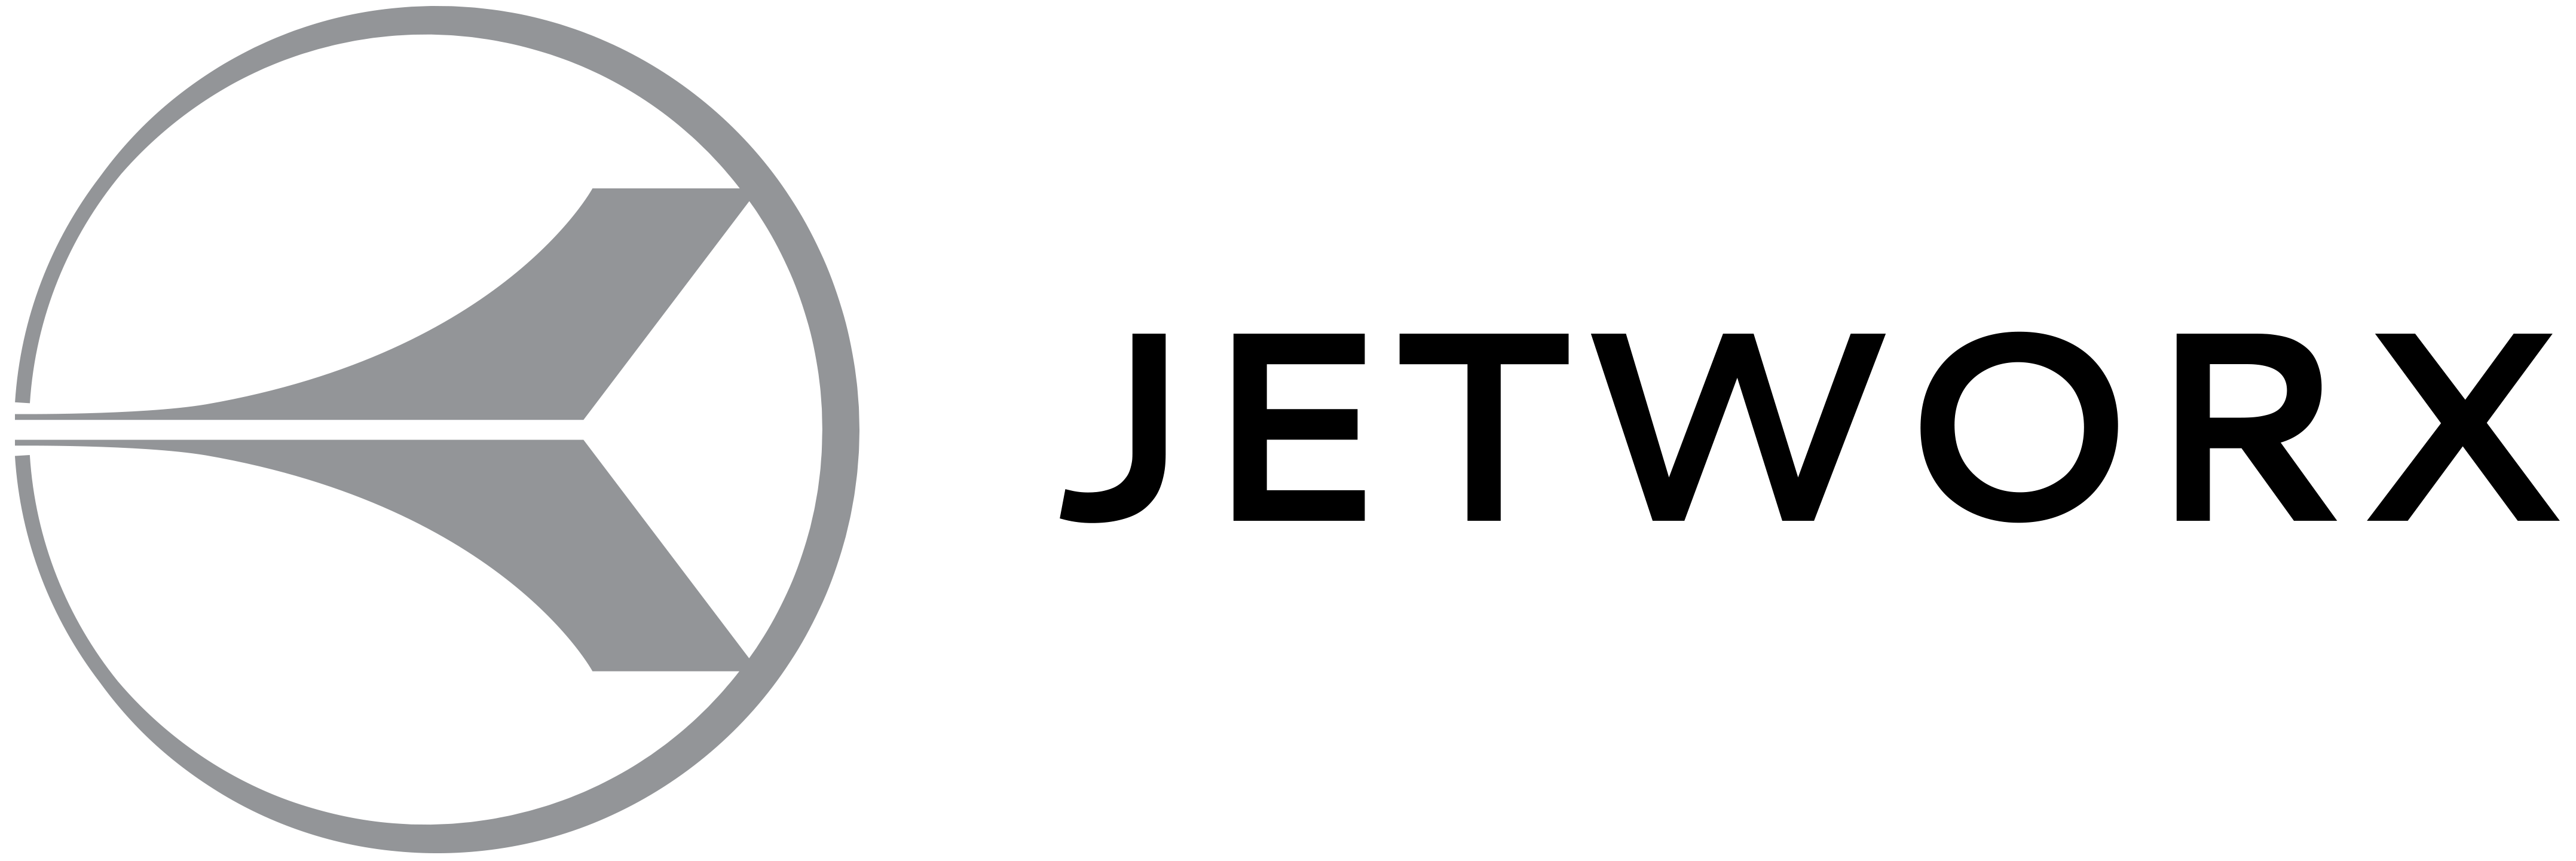 Aircraft Maintenance Logo - JetWorx – JetWorx Aircraft Maintenance